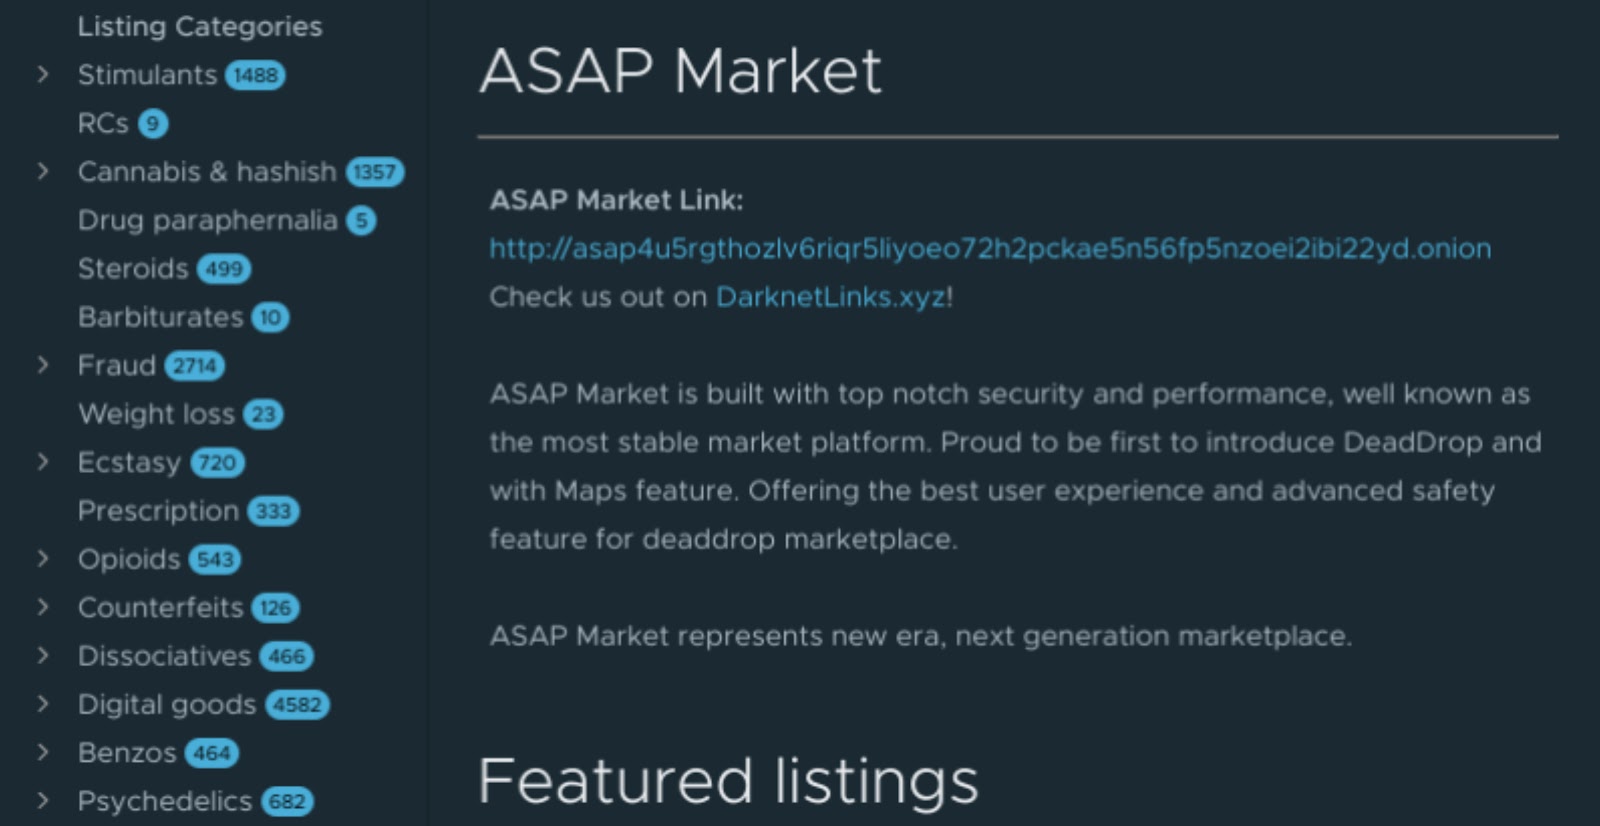 ASAP Market